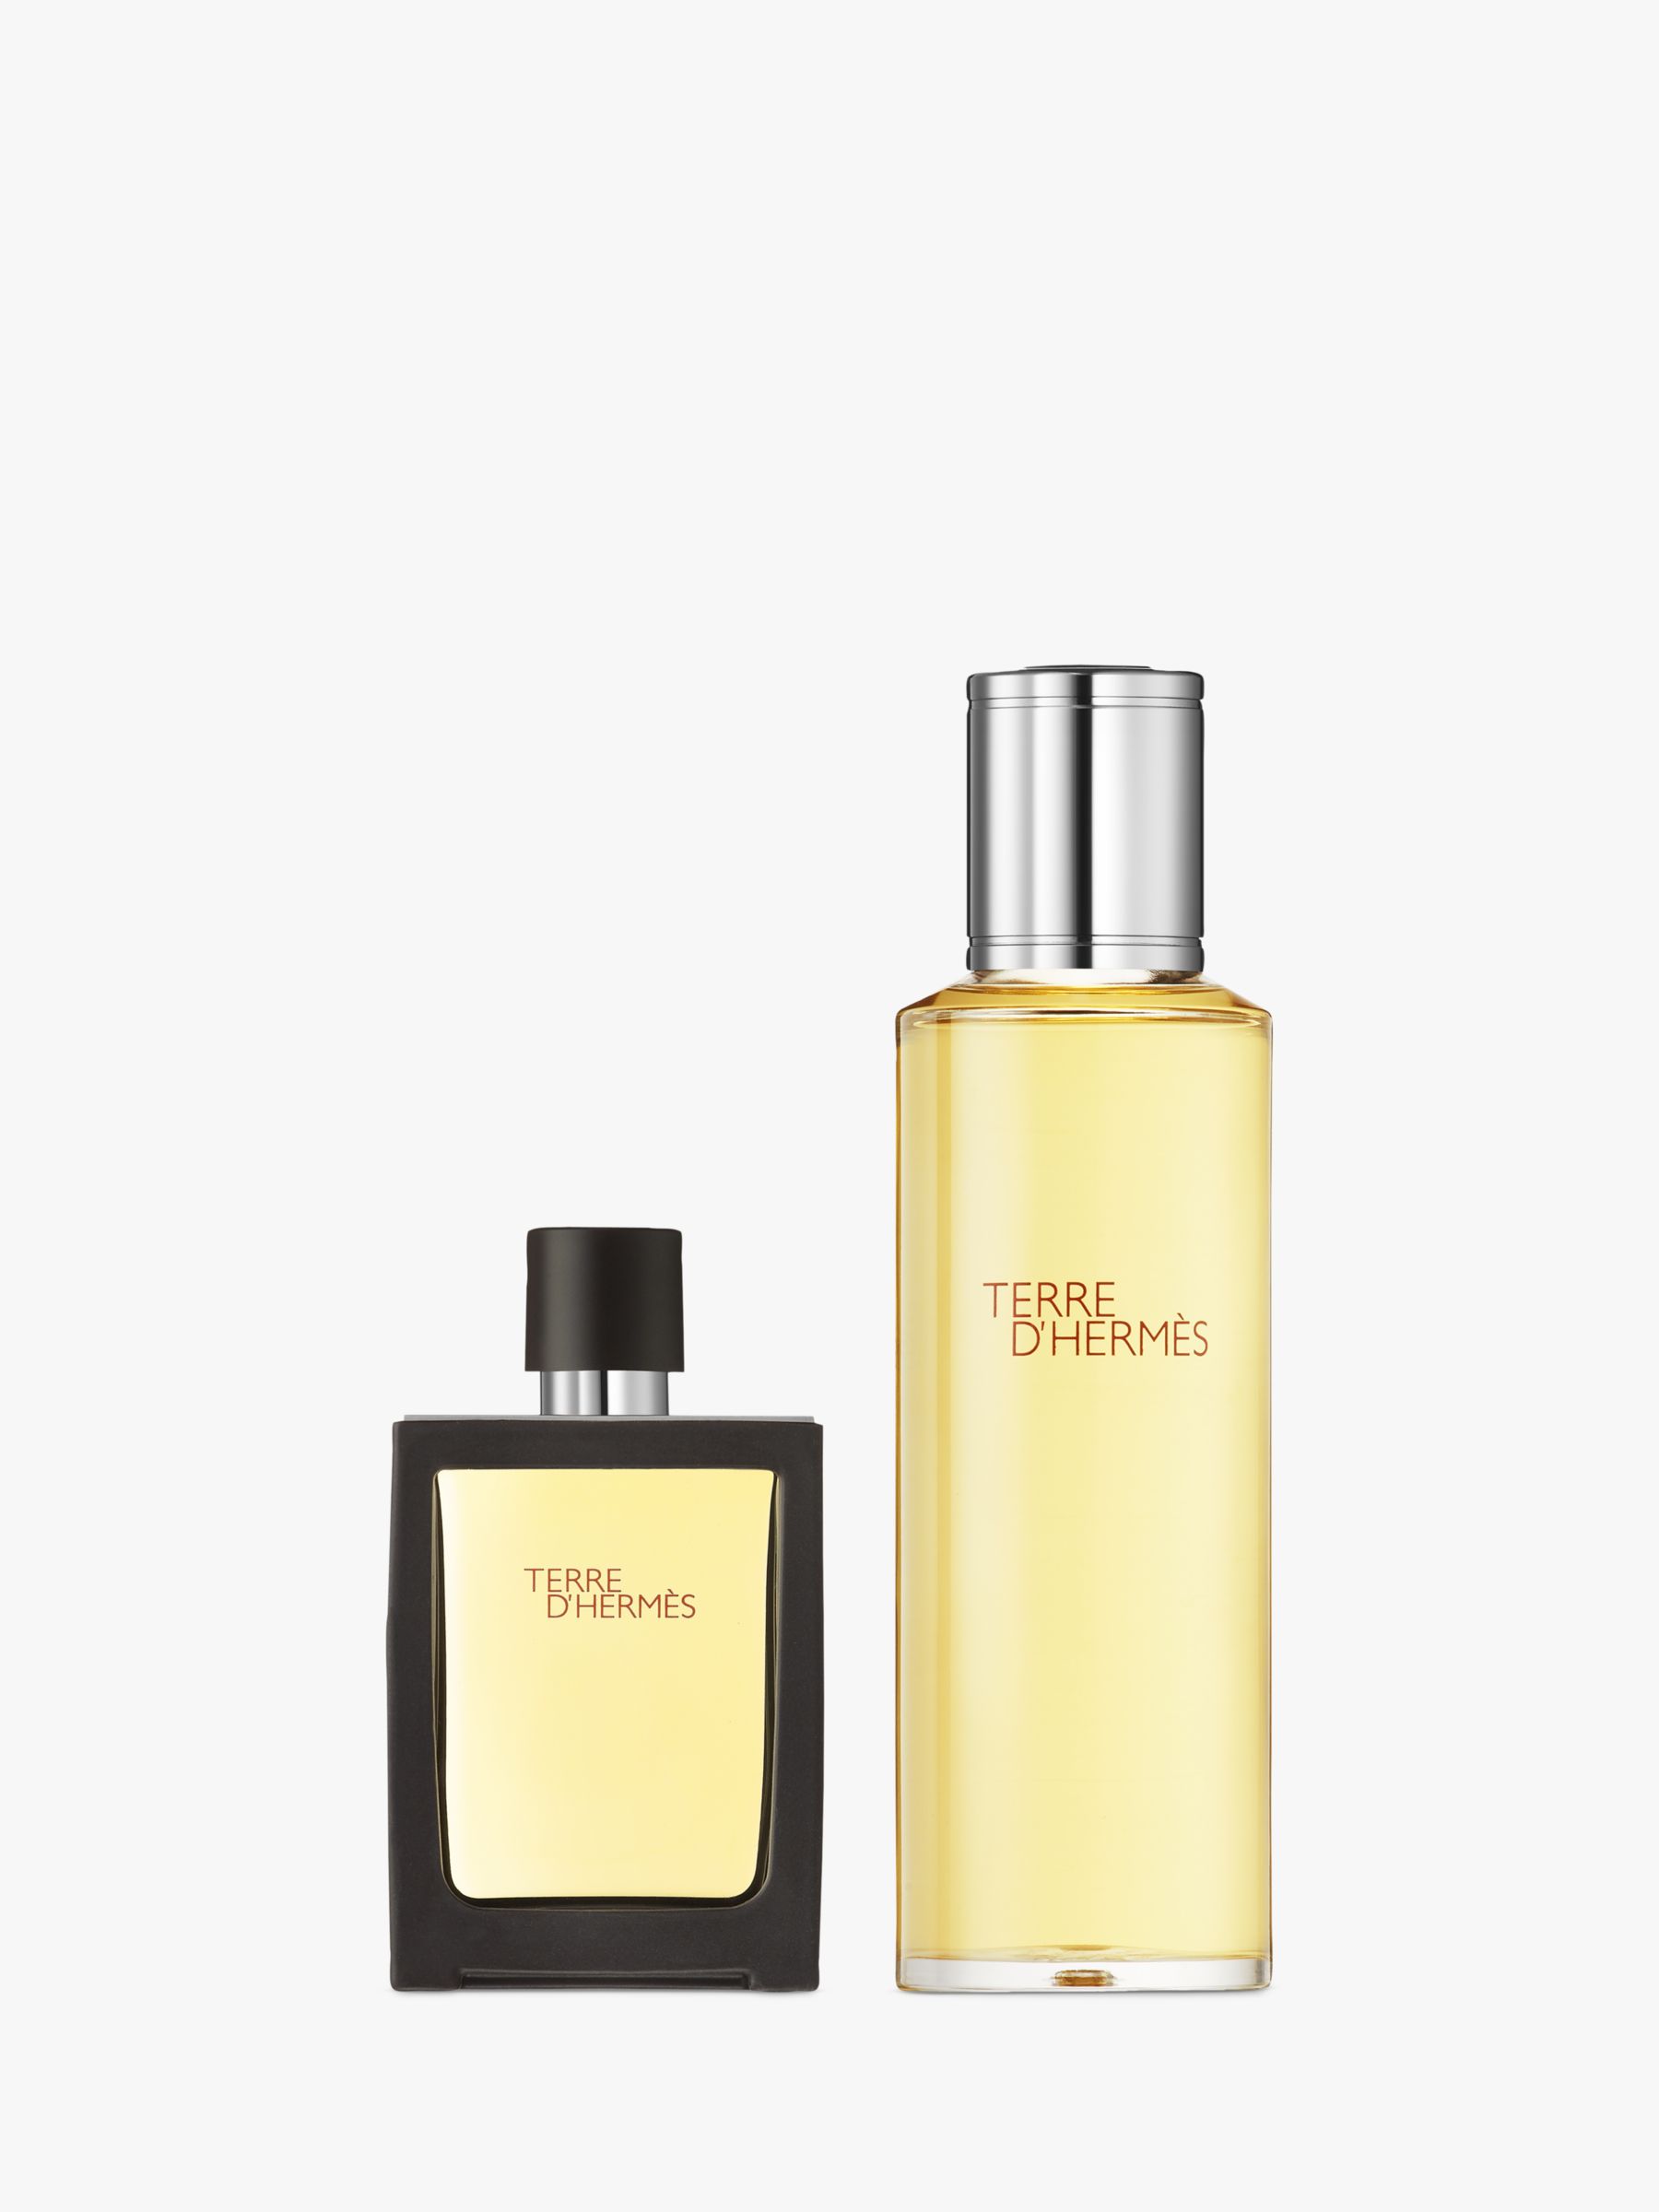 HERMÈS Terre d'Hermès Parfum 30ml + Refill 125ml at John Lewis & Partners